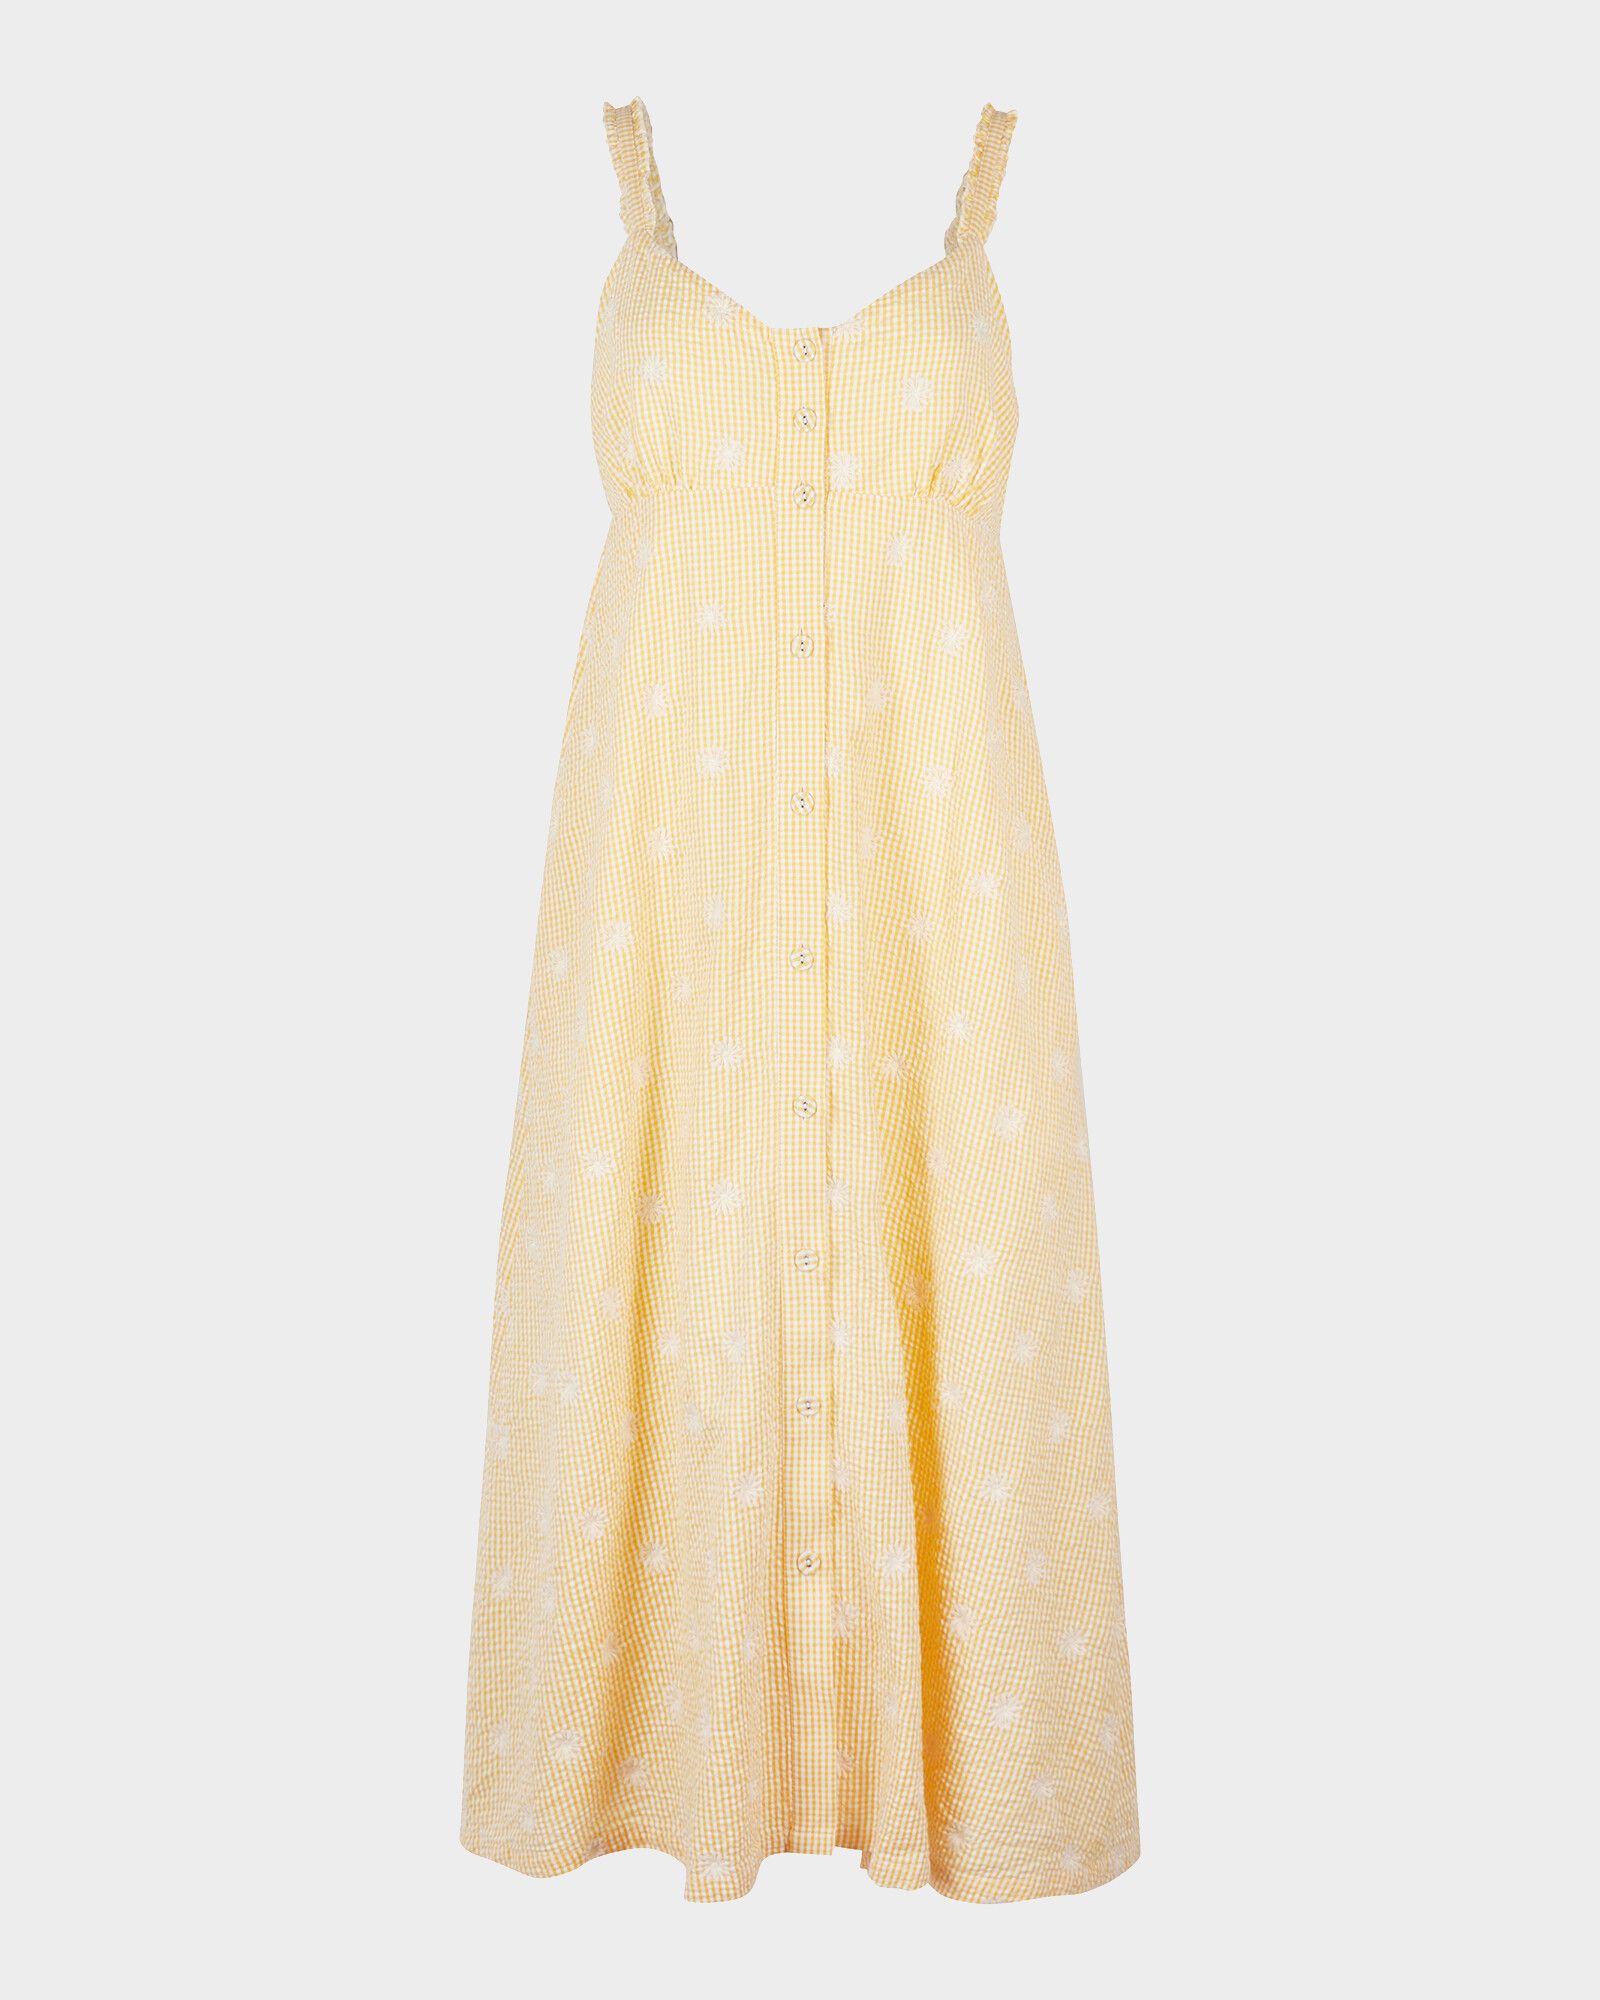 Embroidered Flower & Gingham Print Yellow Midi Dress | Oliver Bonas